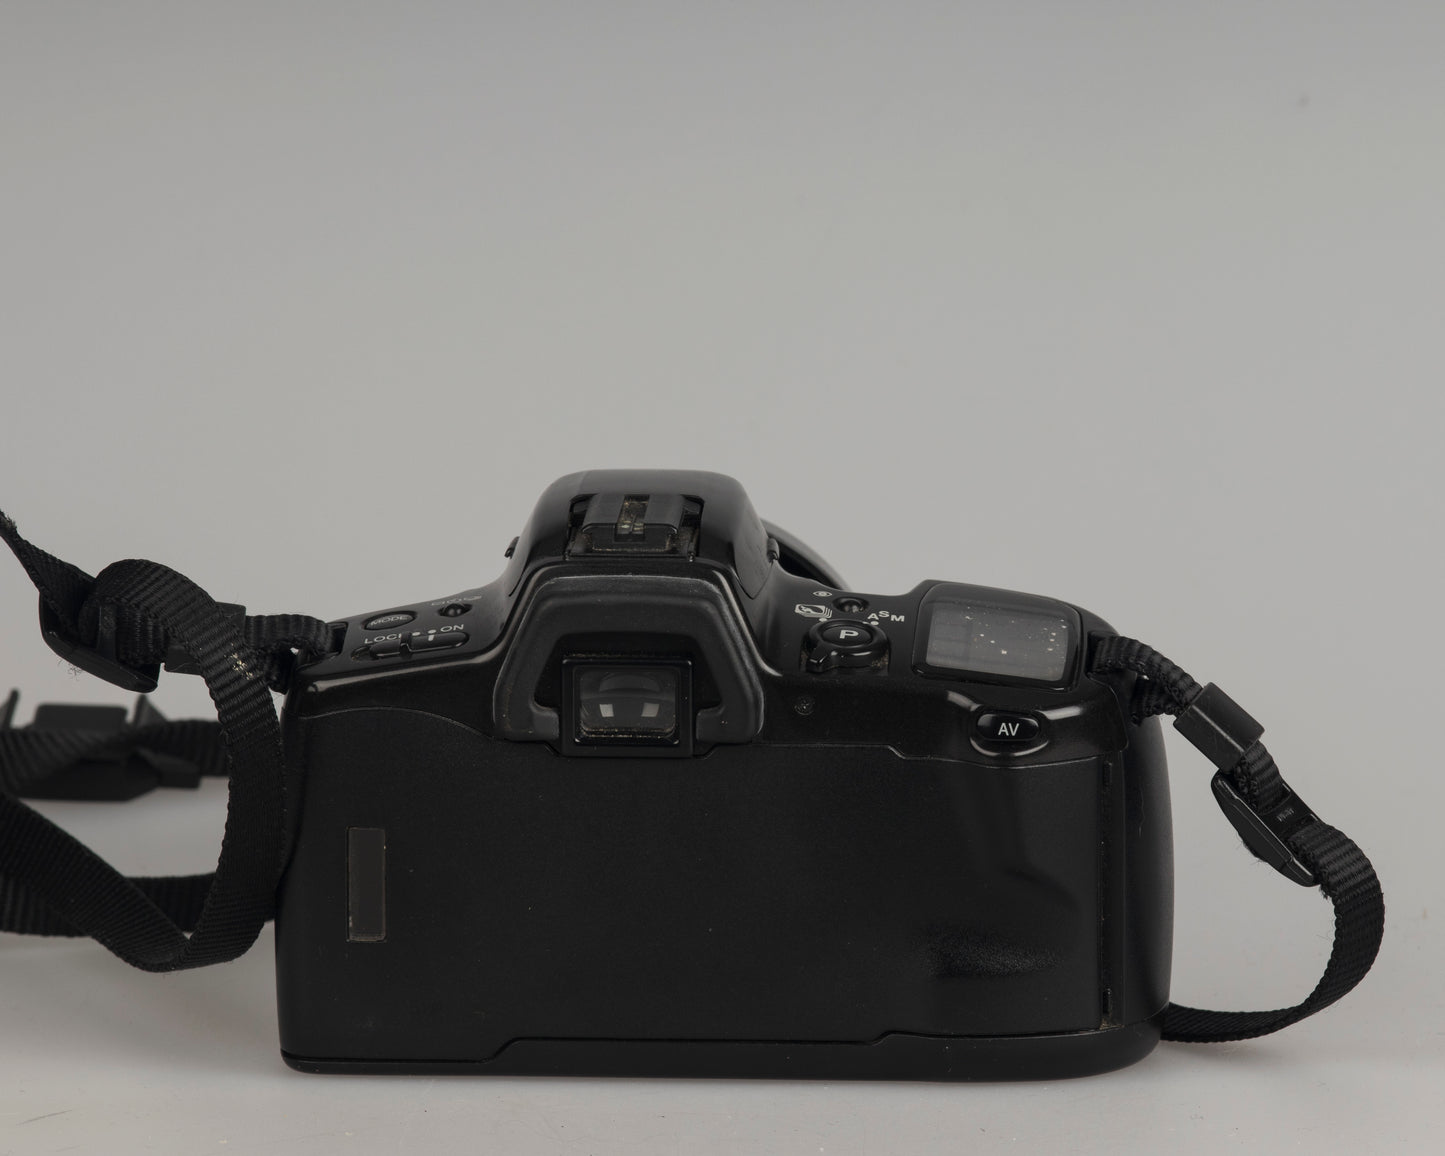 Minolta Maxxum 400si 35mm film SLR camera featuring a 28-80mm lens; back view